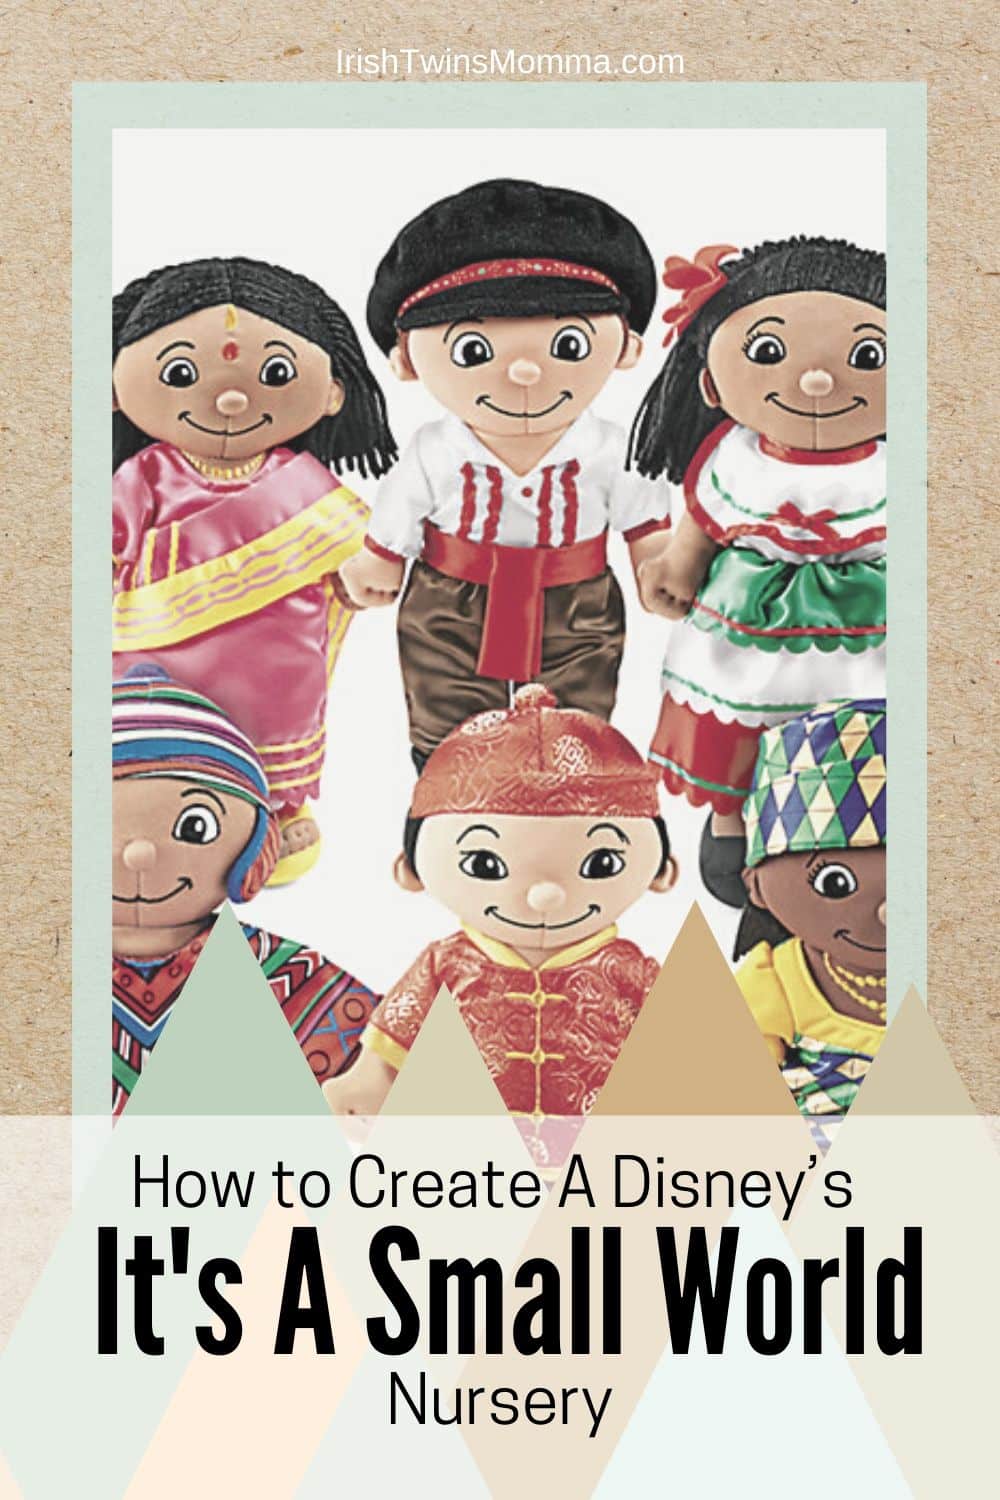 How To Create A Disney S It S A Small World Themed Nursery The Irish Twin S Momma